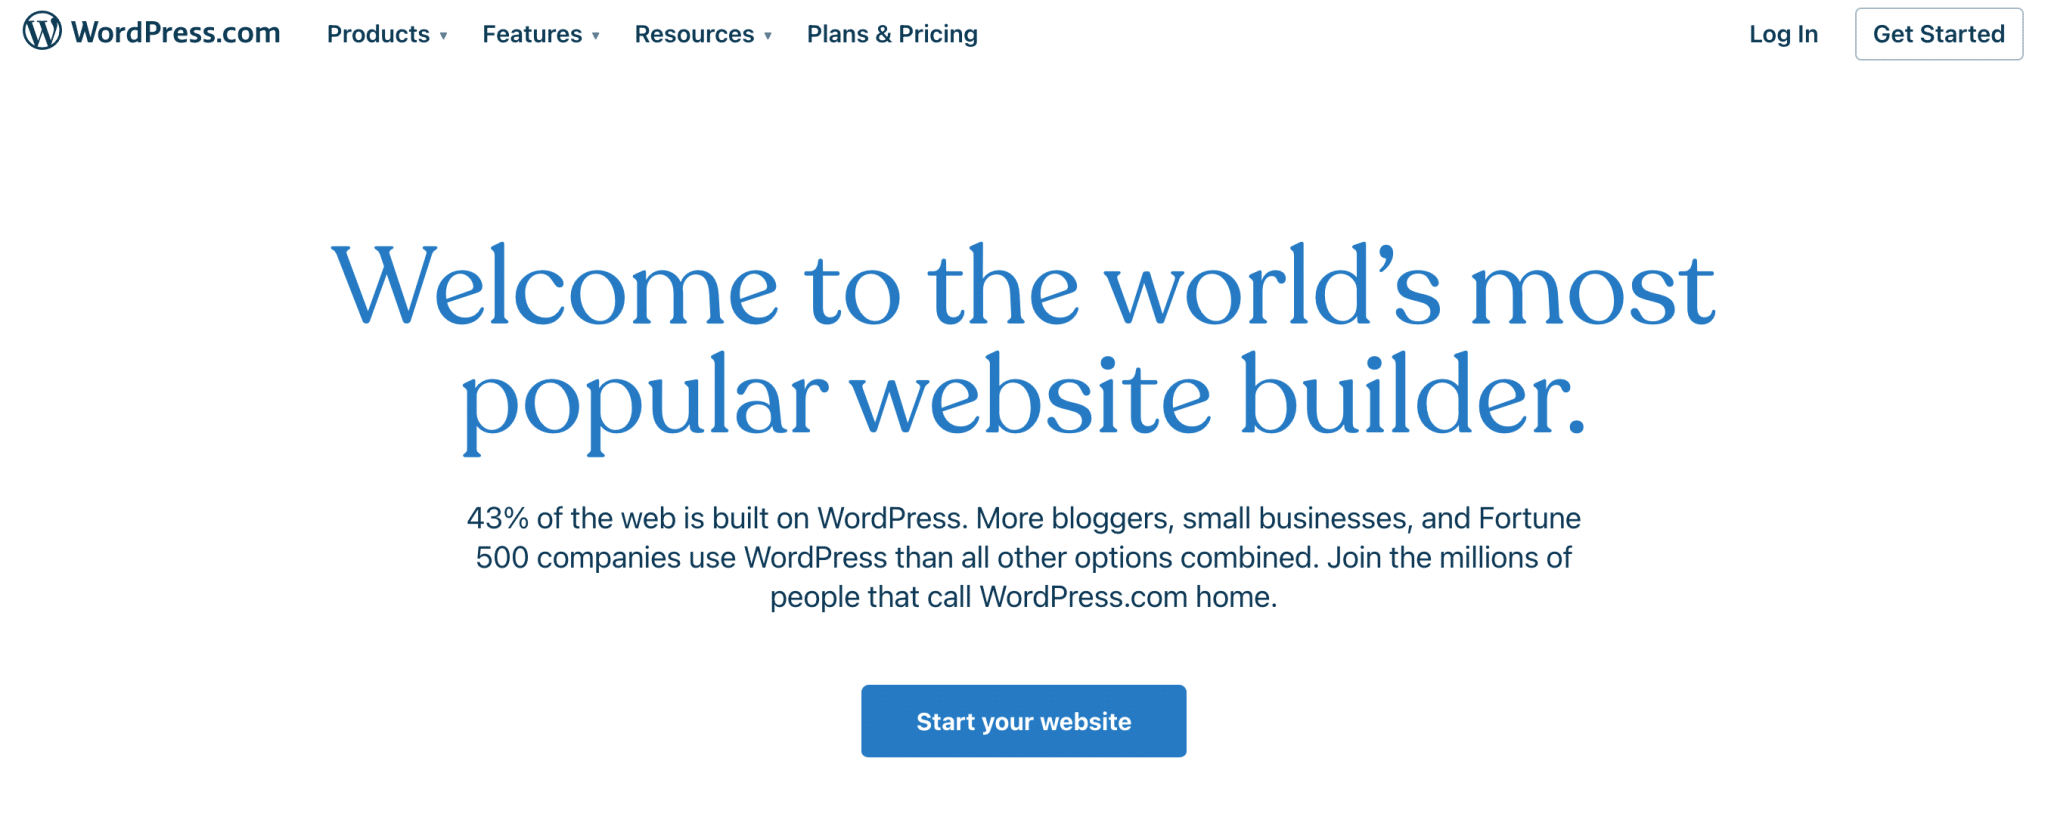 Homepage of the WordPress.com website